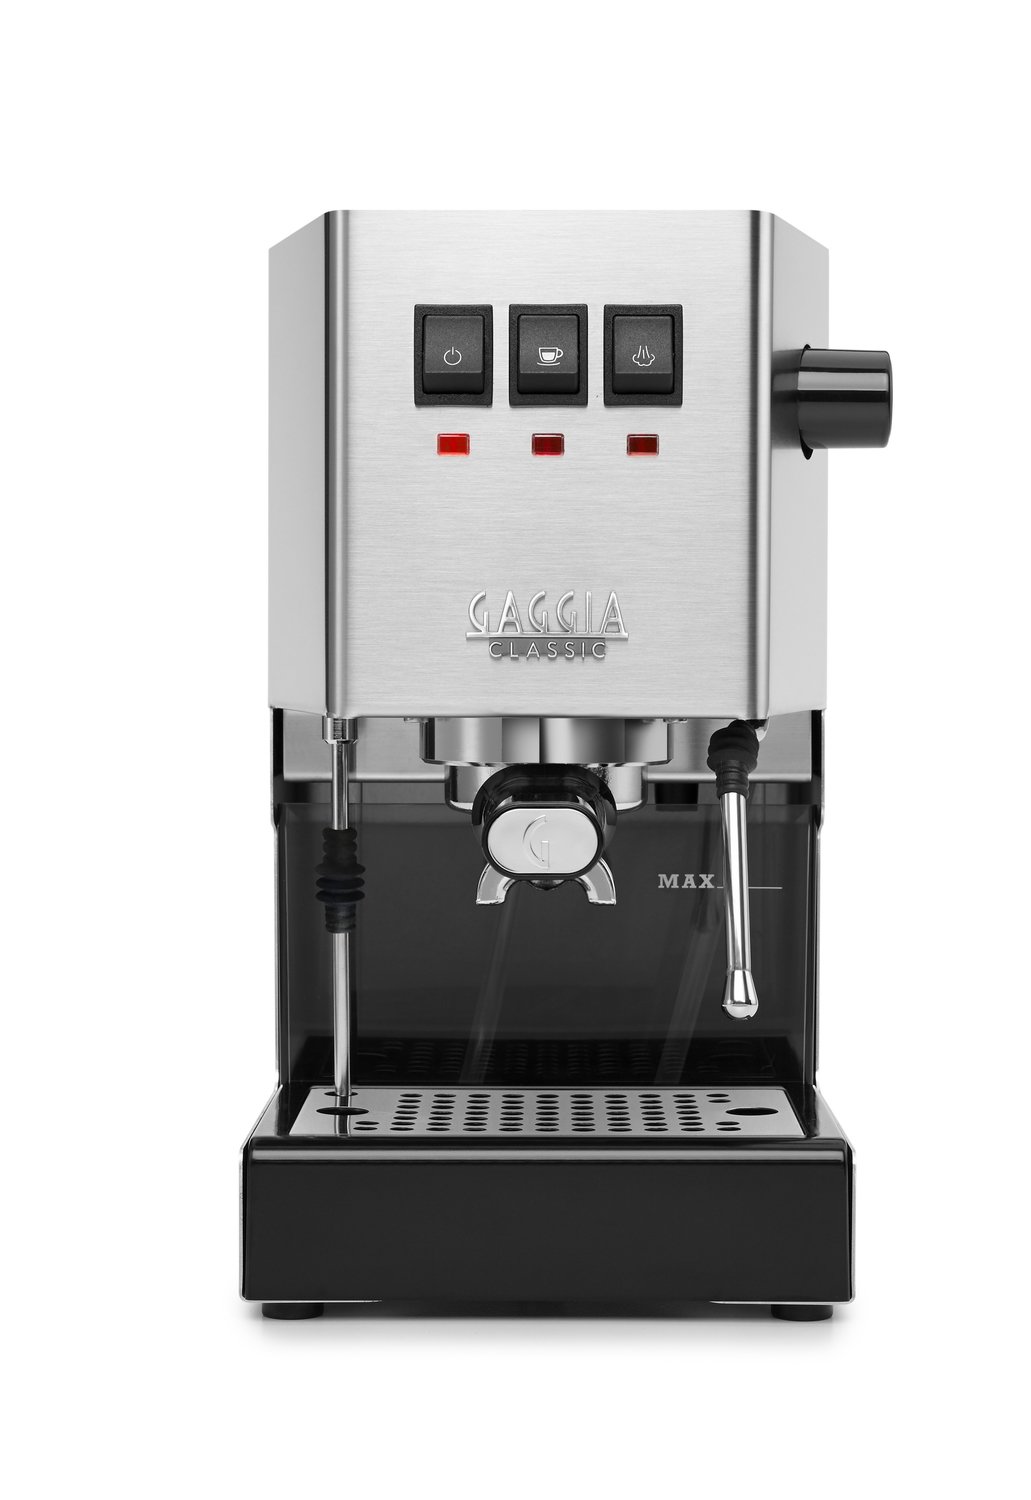 Gaggia Classic 2019 SB SS 240V | Manual Espresso Coffee Machine - REFURBISHED